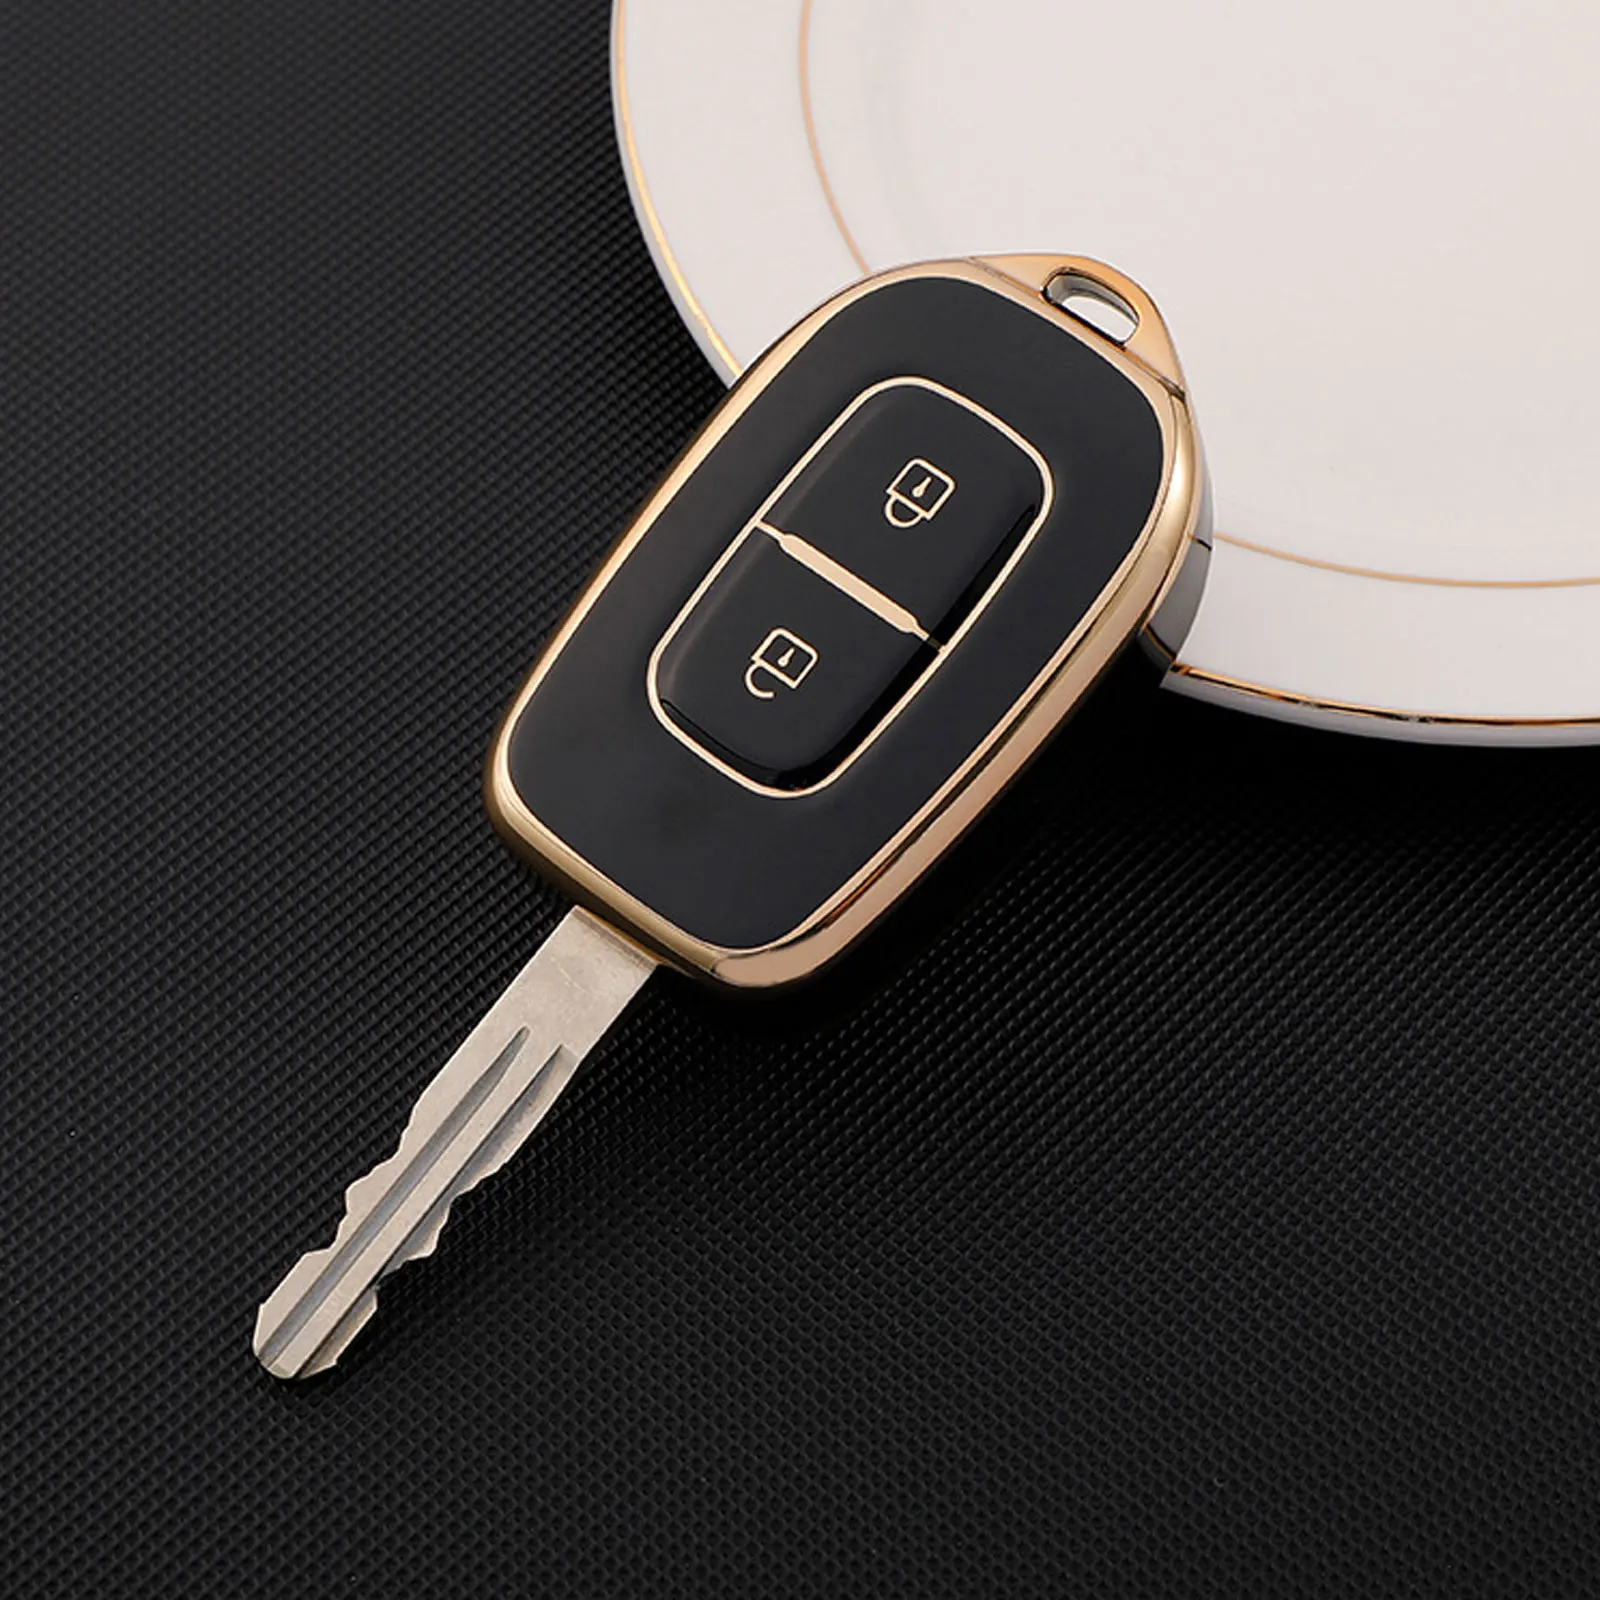 2 Button TPU Car Remote Key Fob Cover Case for Renault Kwid Traffic Symbol for Dacia Sandero Logan Duster 2016 2017 2018 Shell